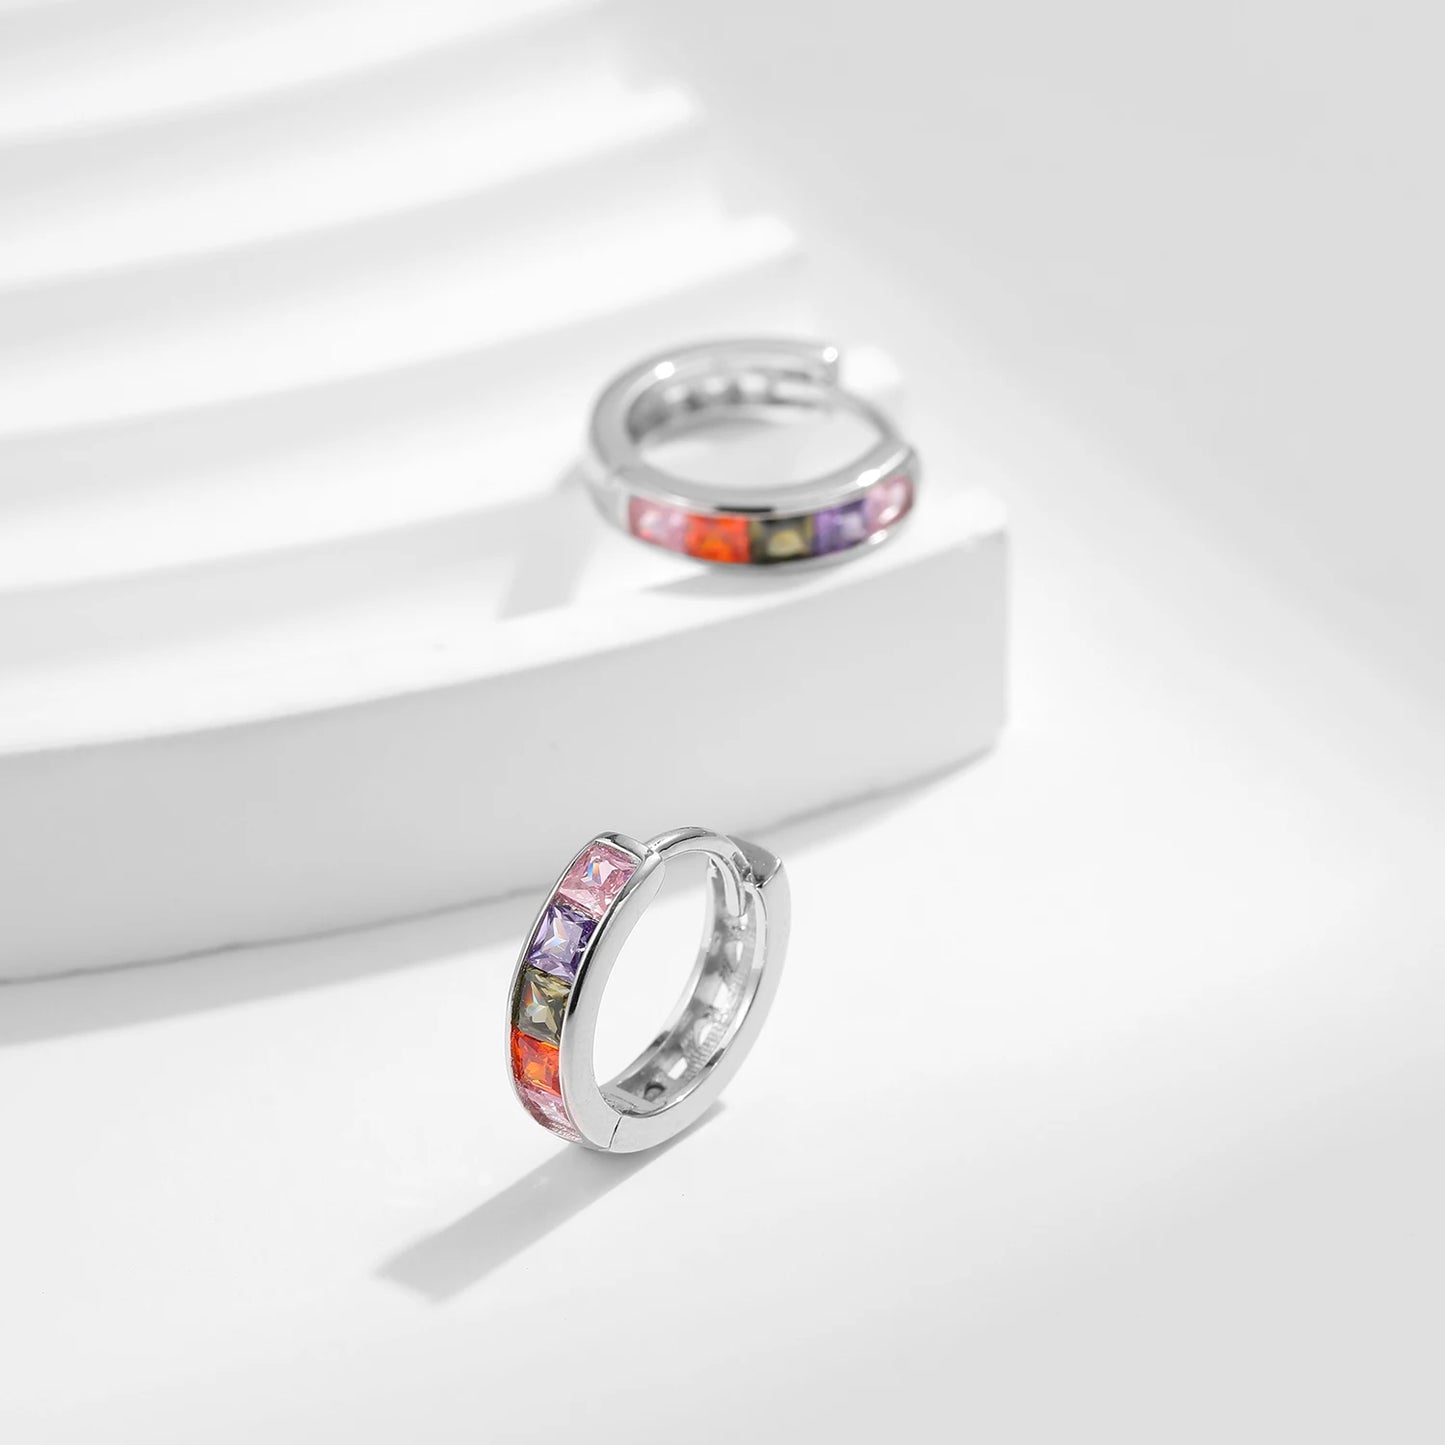 Stunning MQ S925 Silver Earrings - Colorful Women's Jewelry